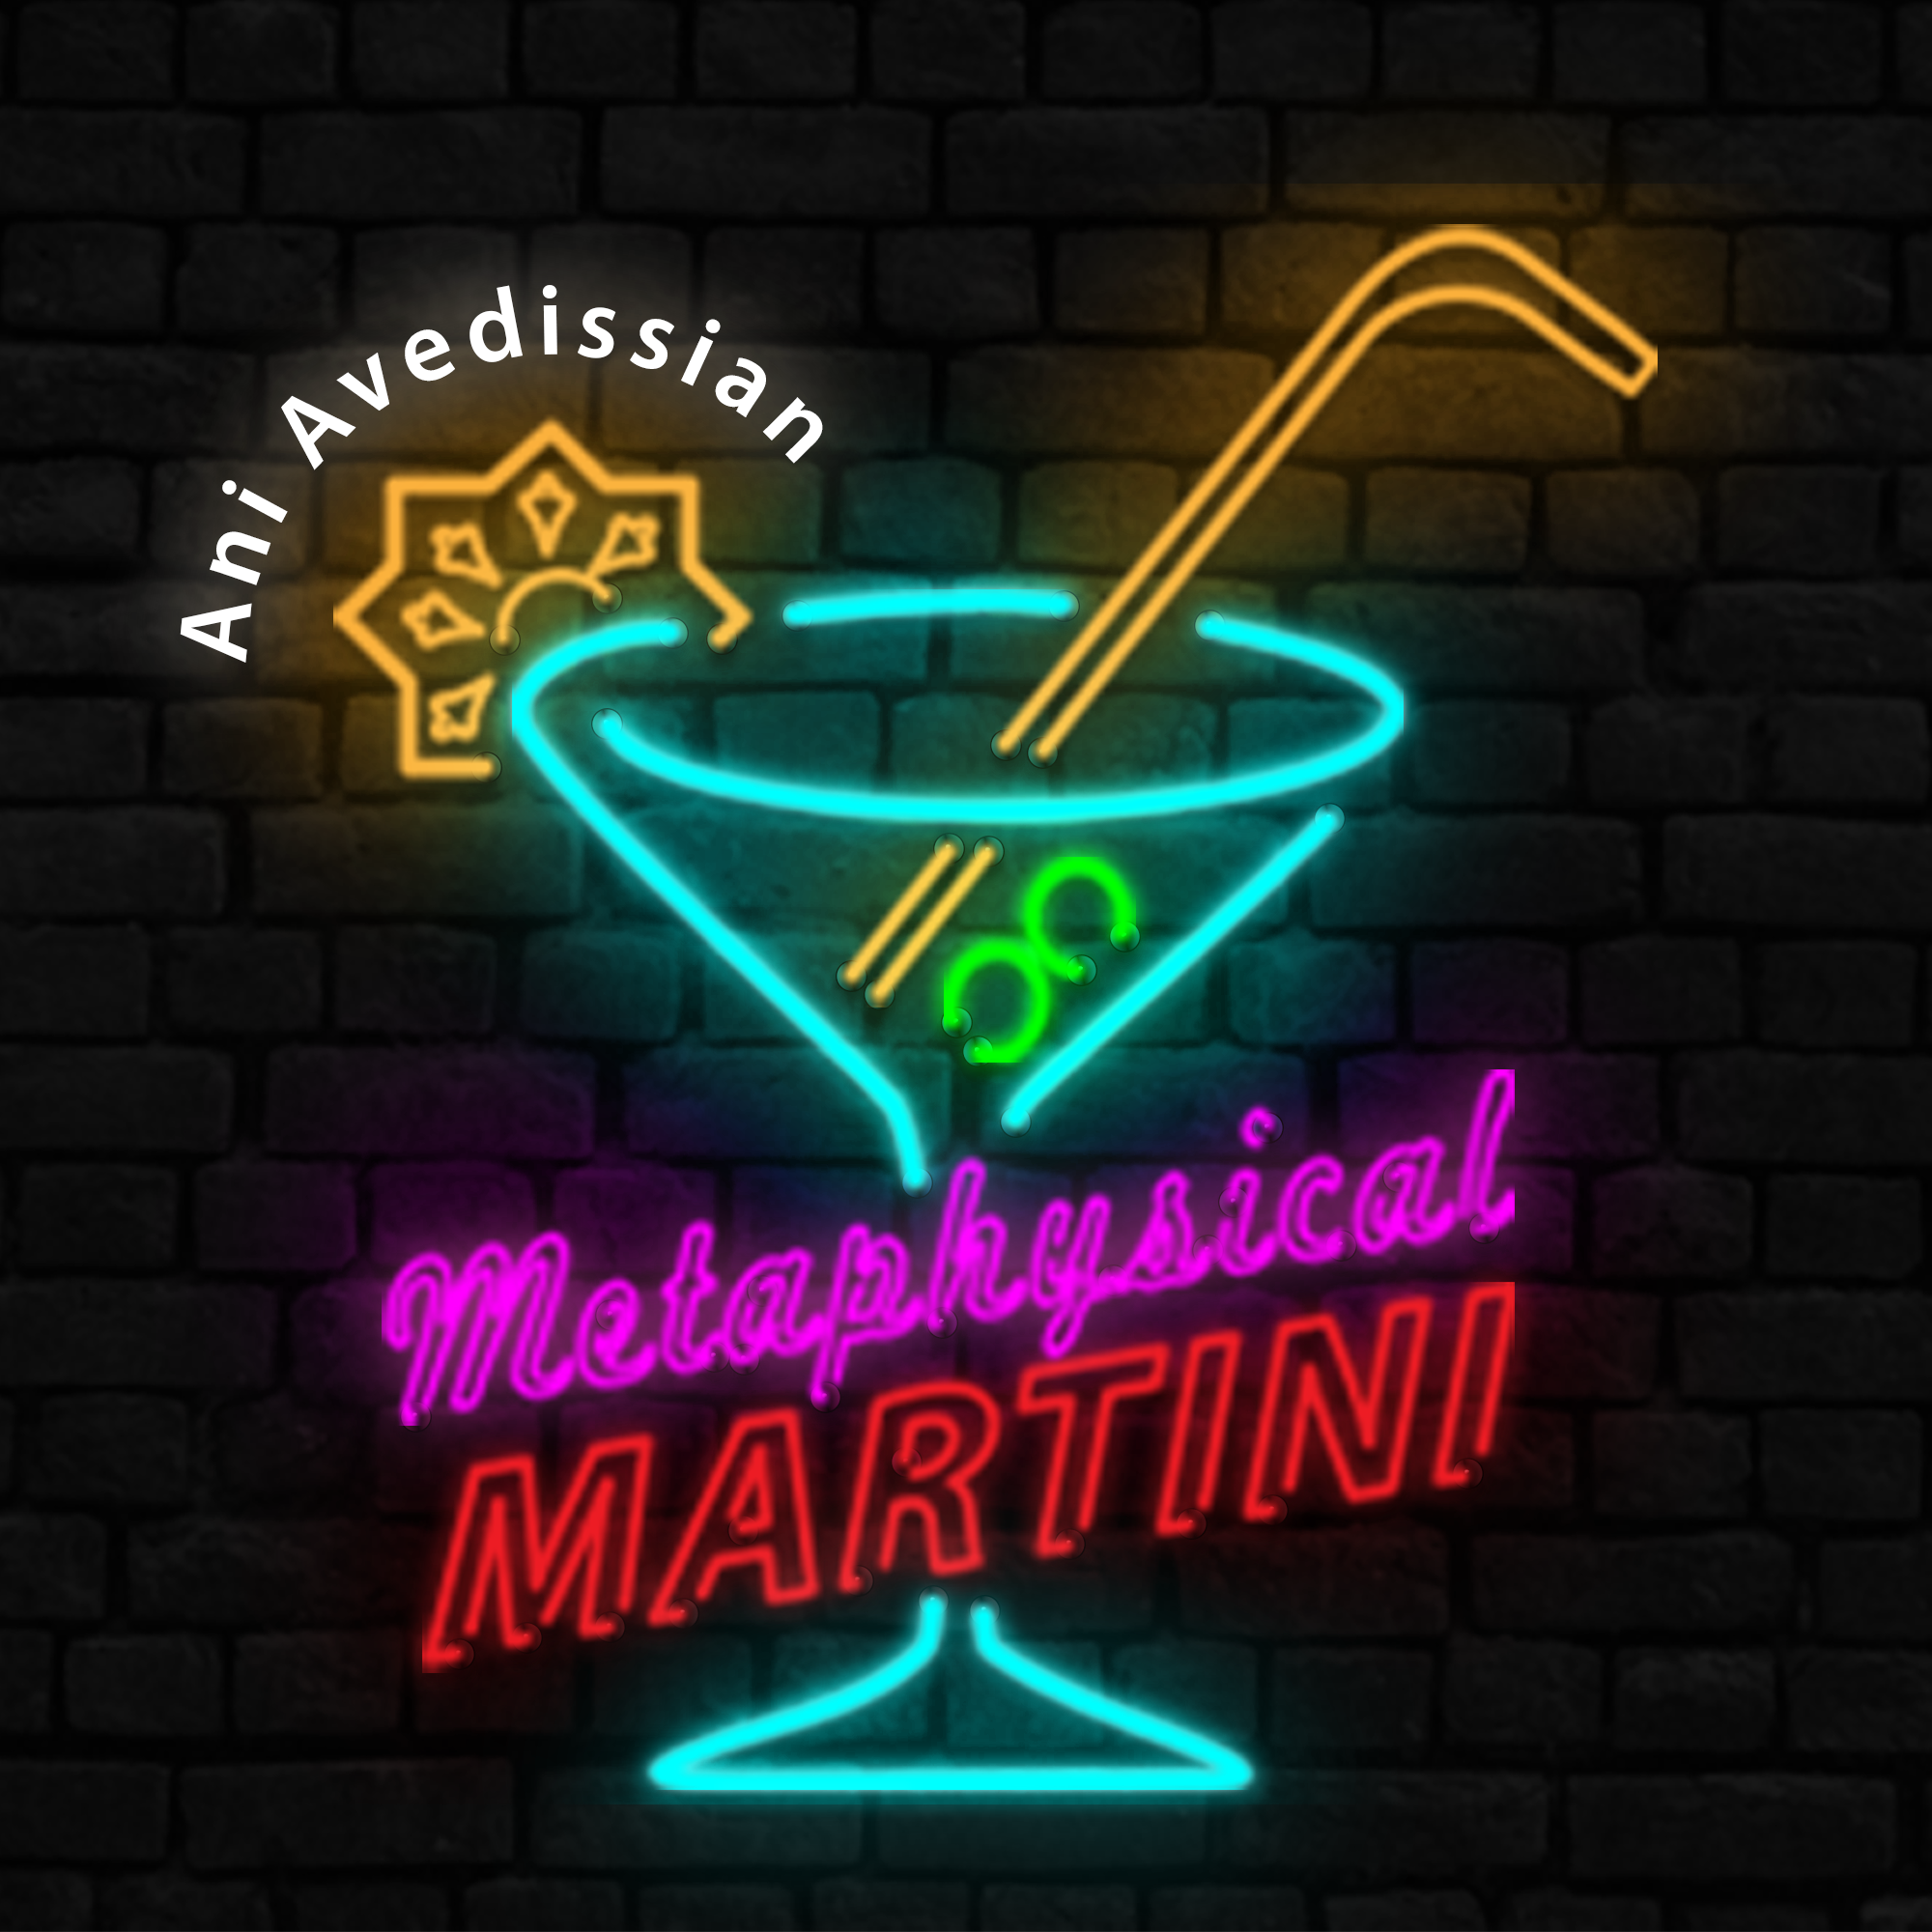 "Metaphysical Martini"   09/04/2022  - Hit them hard!  . .. and wise words from Soren Kierkegaard